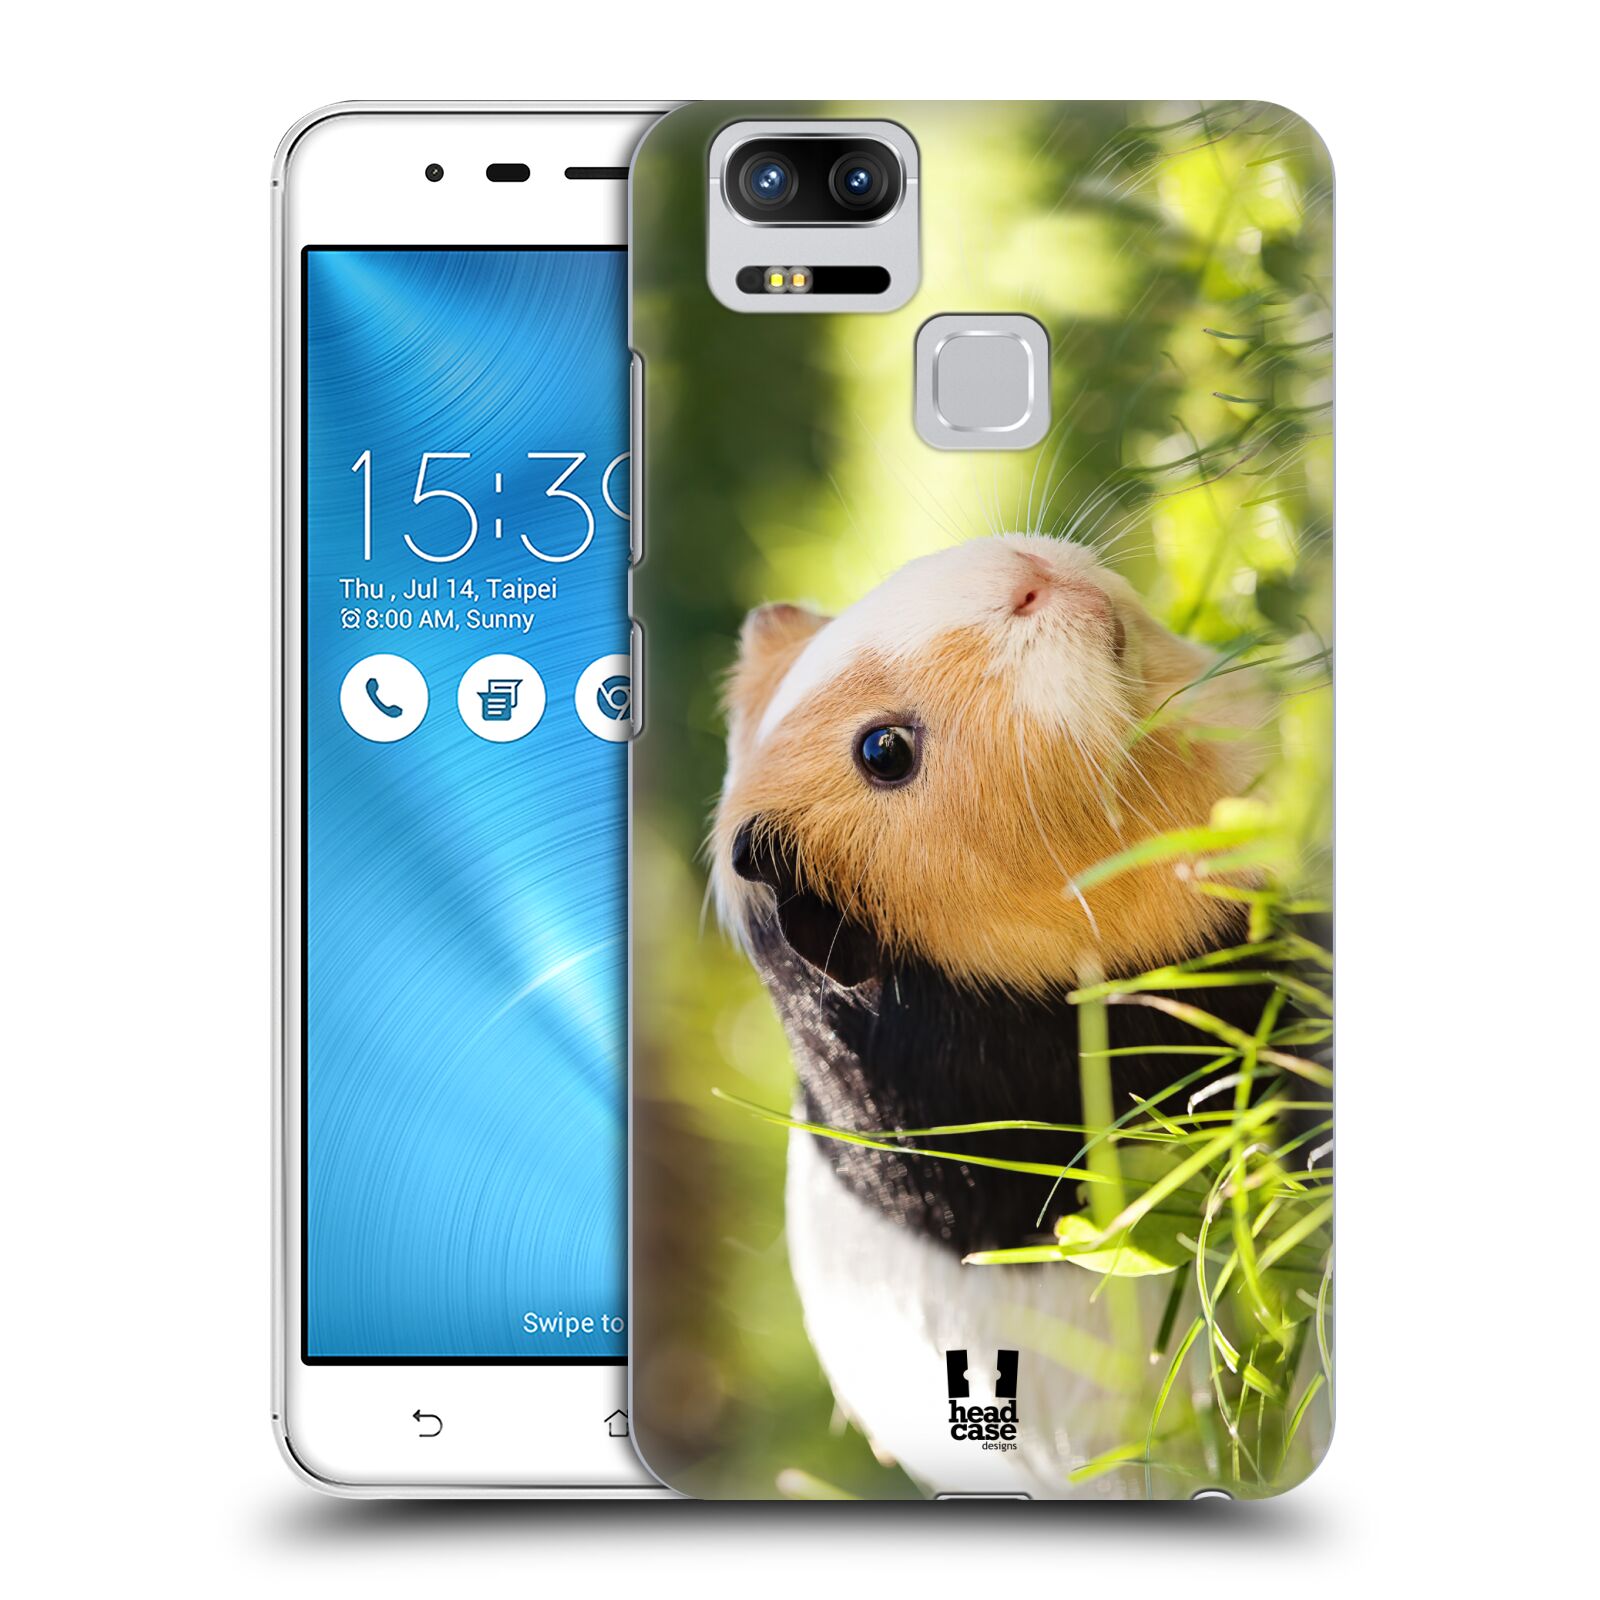 HEAD CASE plastový obal na mobil Asus Zenfone 3 Zoom ZE553KL vzor slavná zvířata foto morče